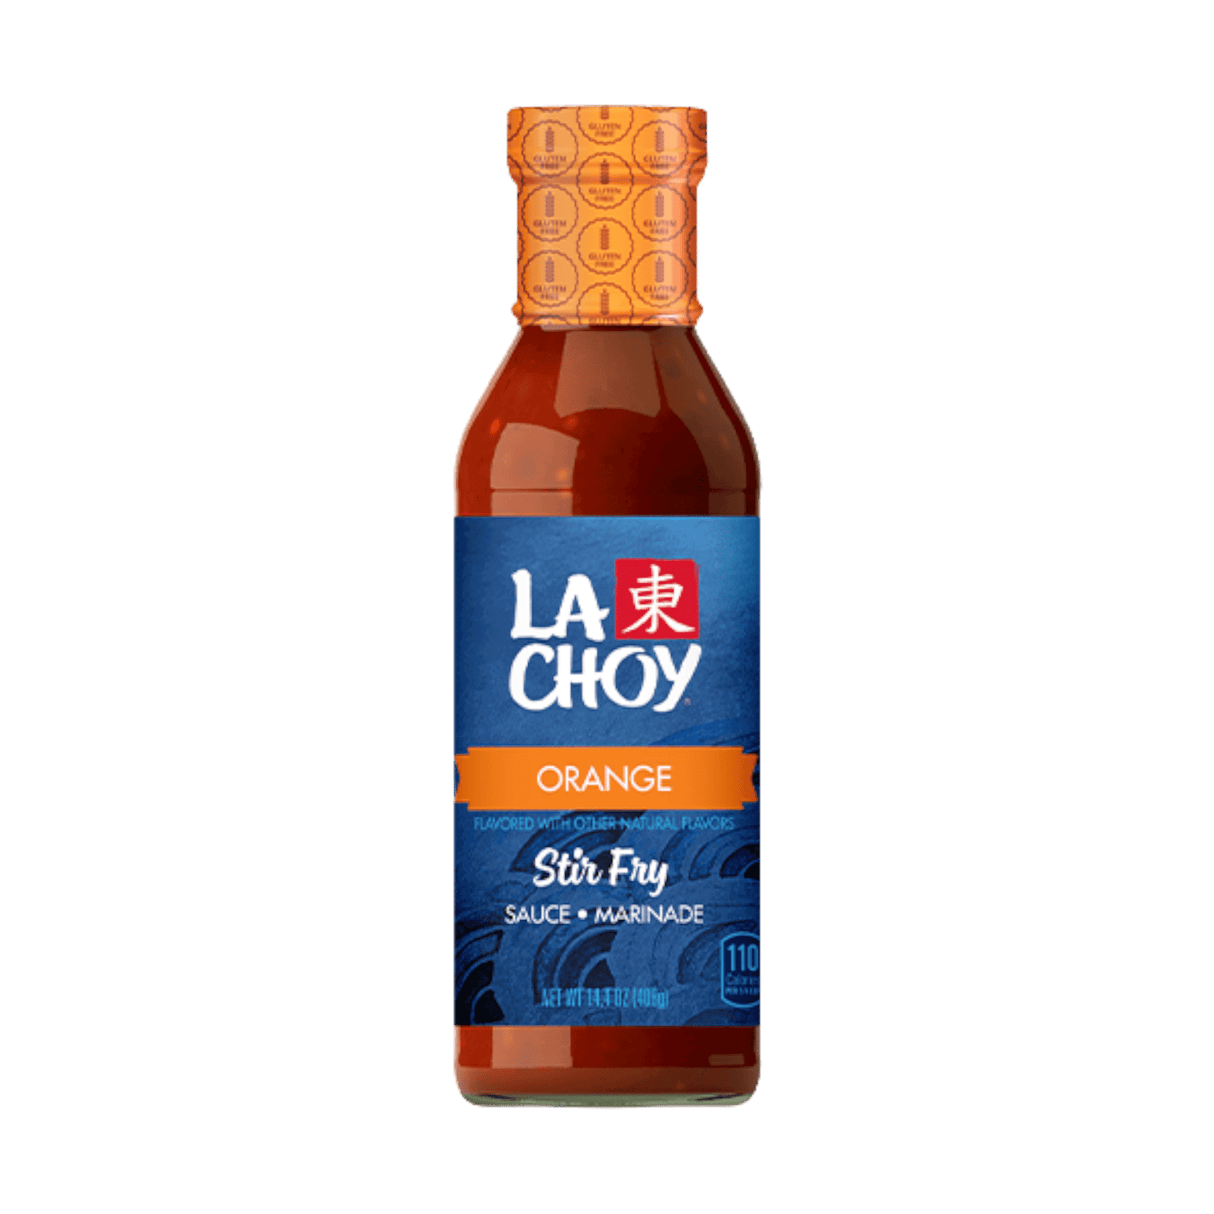 La Choy Orange Flavored Stir Fry Sauce & Marinade